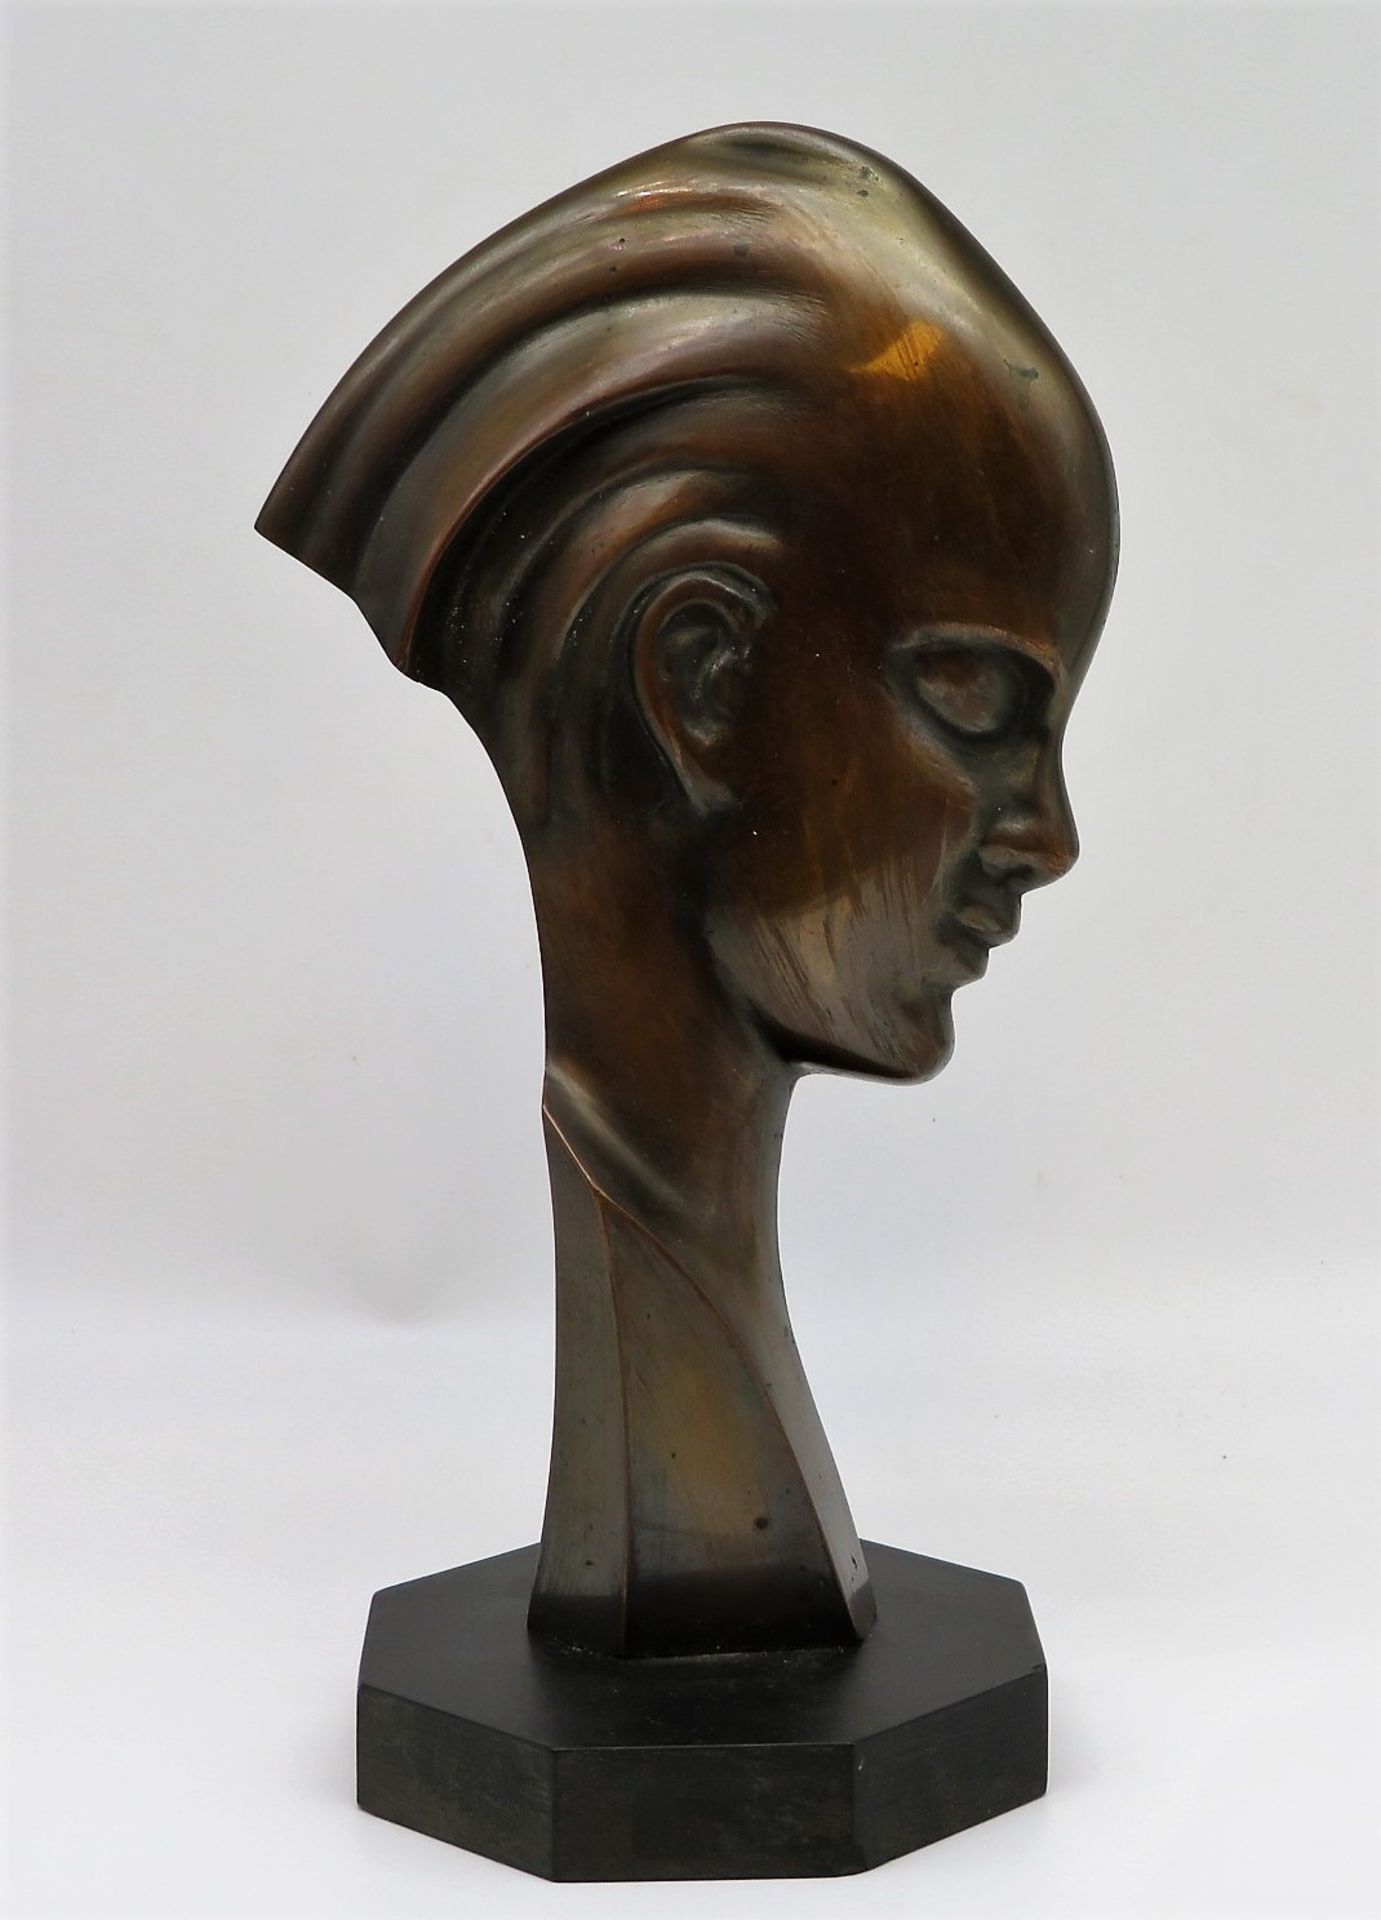 Unbekannt, Art déco, um 1910, "Mädchenkopf", Bronze, Sockel Bakelit, 28,5 x 15,5 x 11,5 cm.